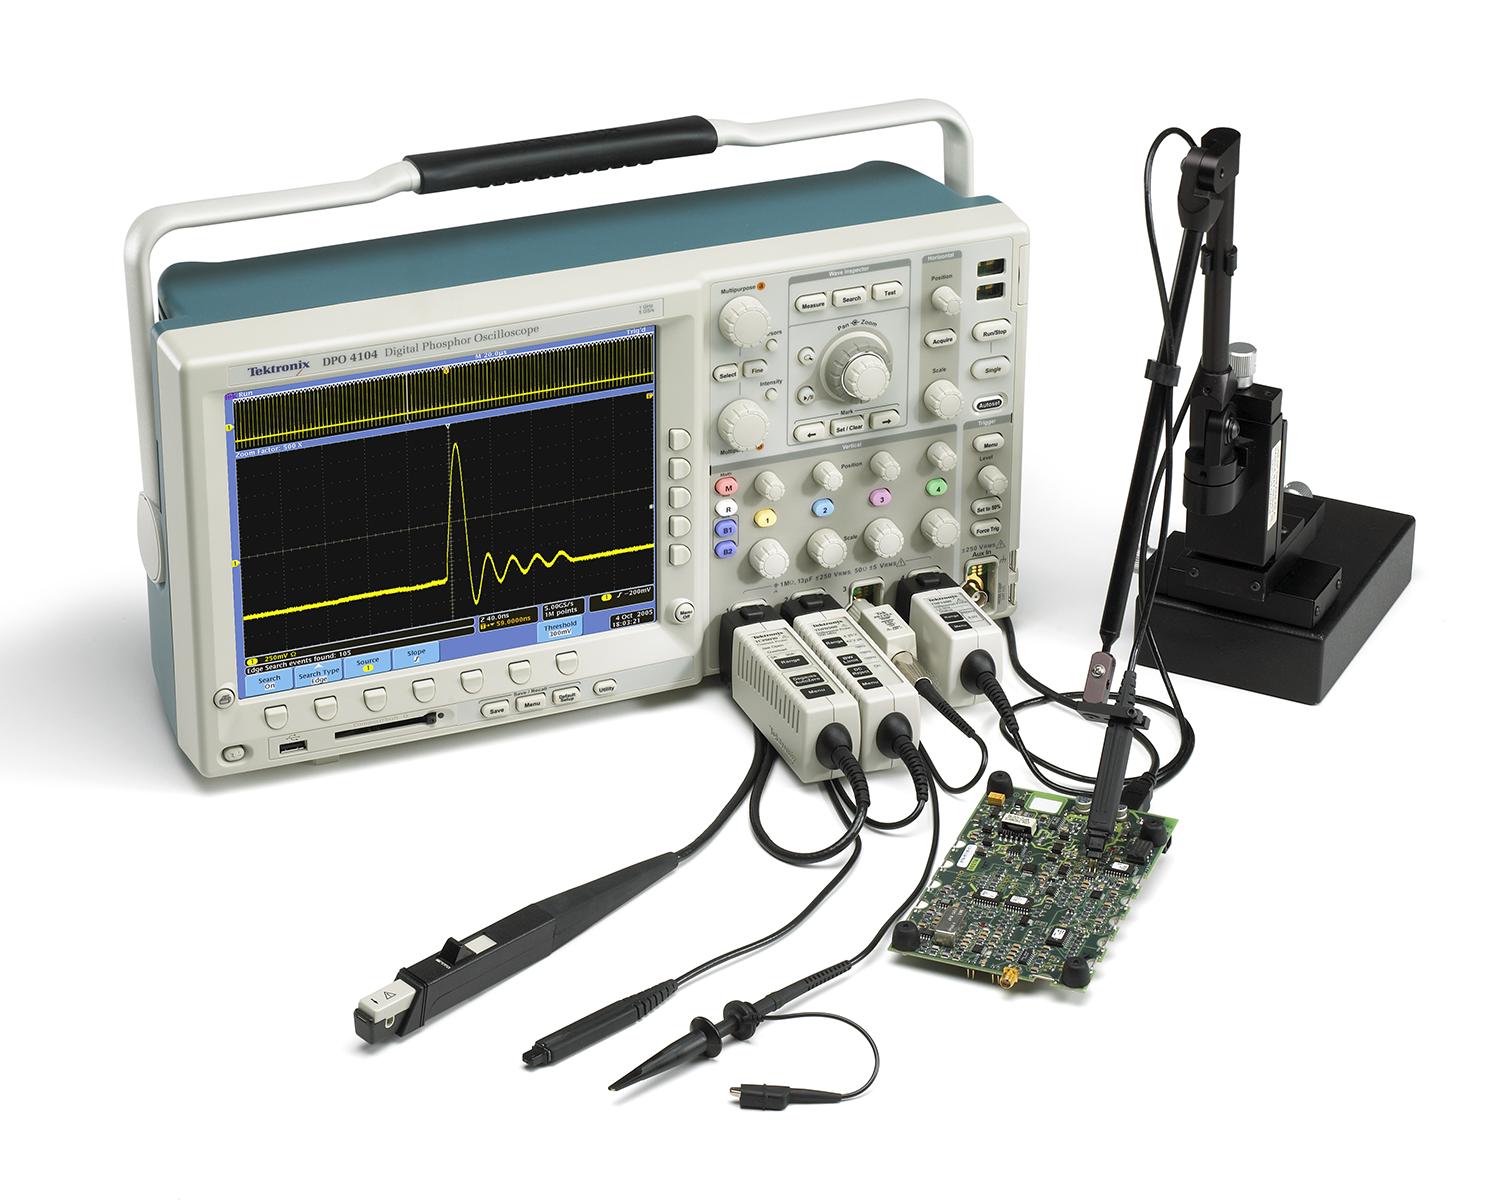 Tektronix oscilloscope with probes